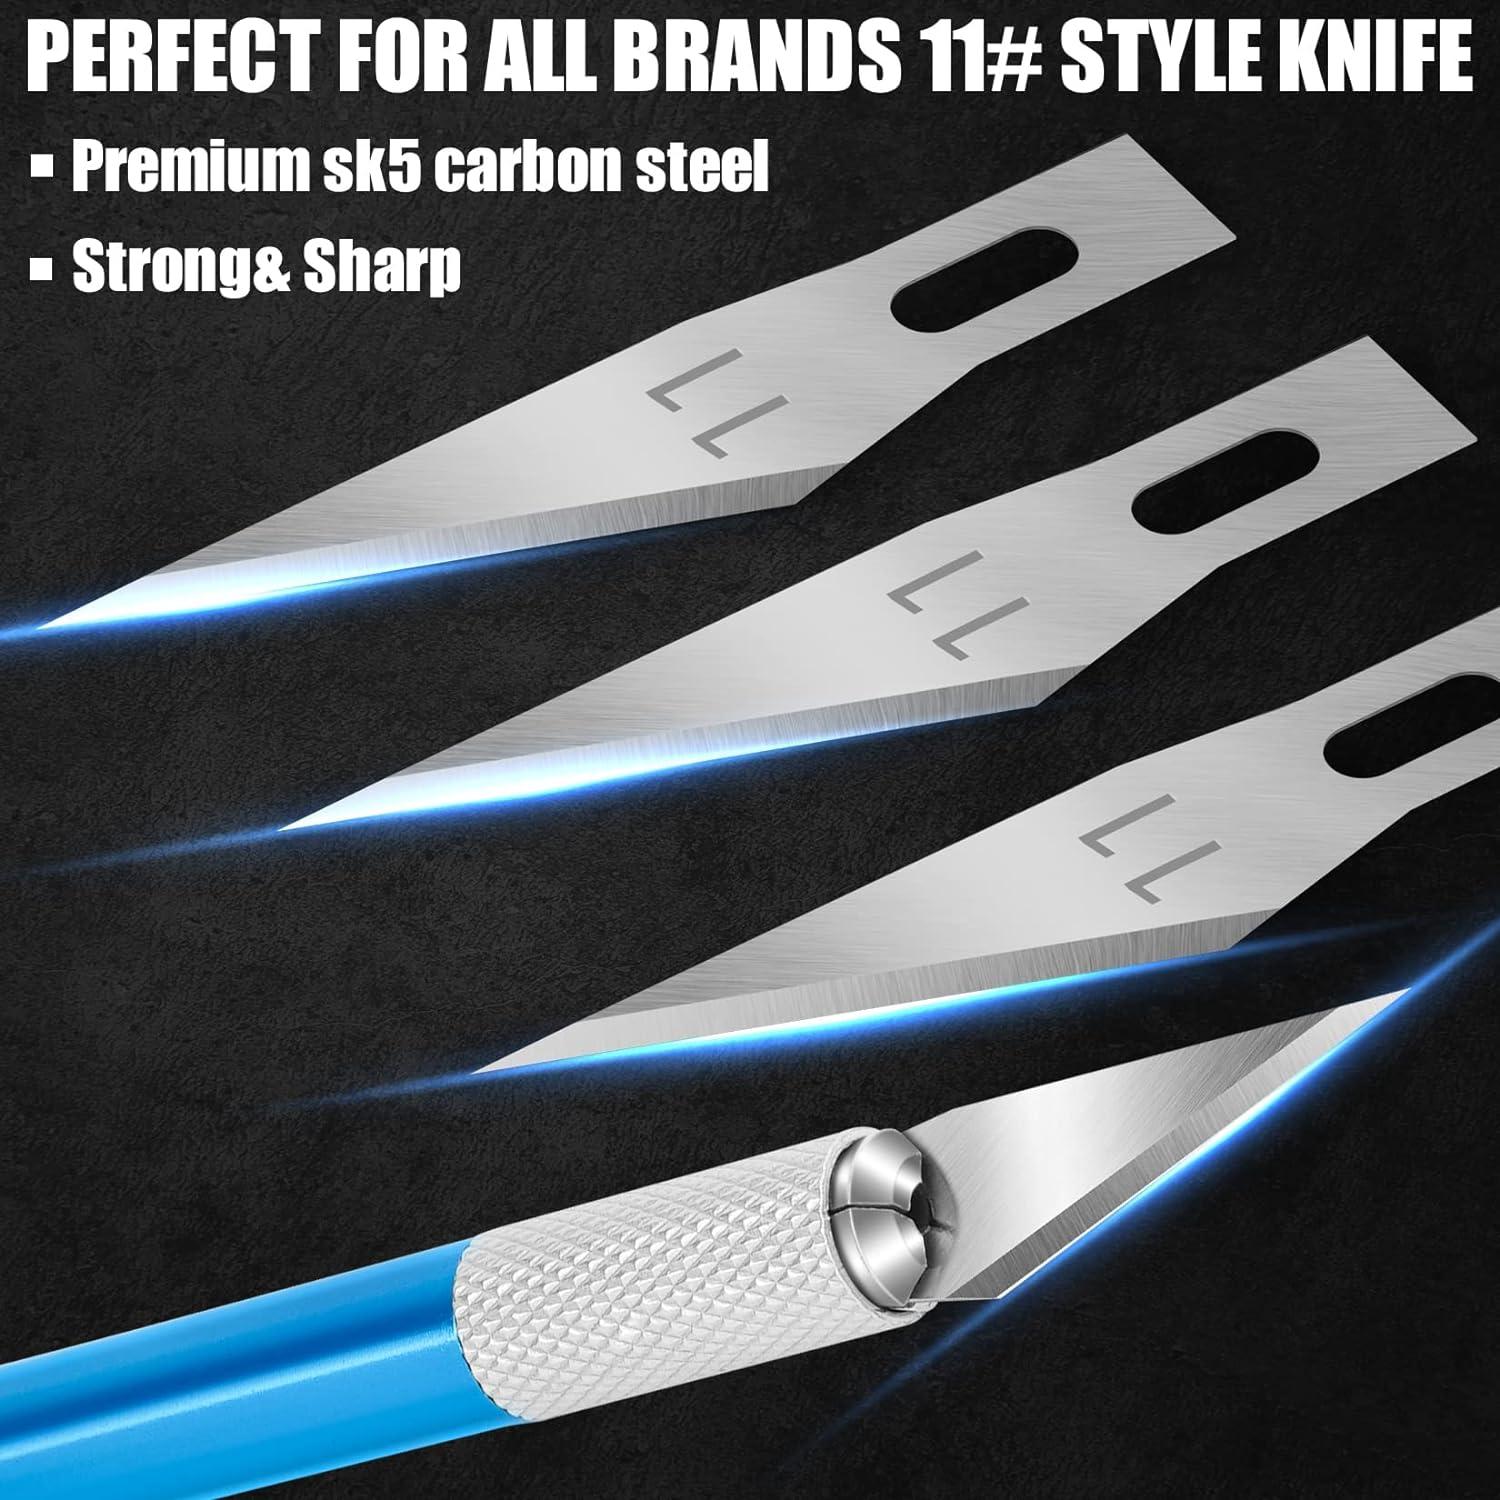 JTIEO 100 PCS Exacto Knife Blades SK5 Carbon Steel #11 Exacto